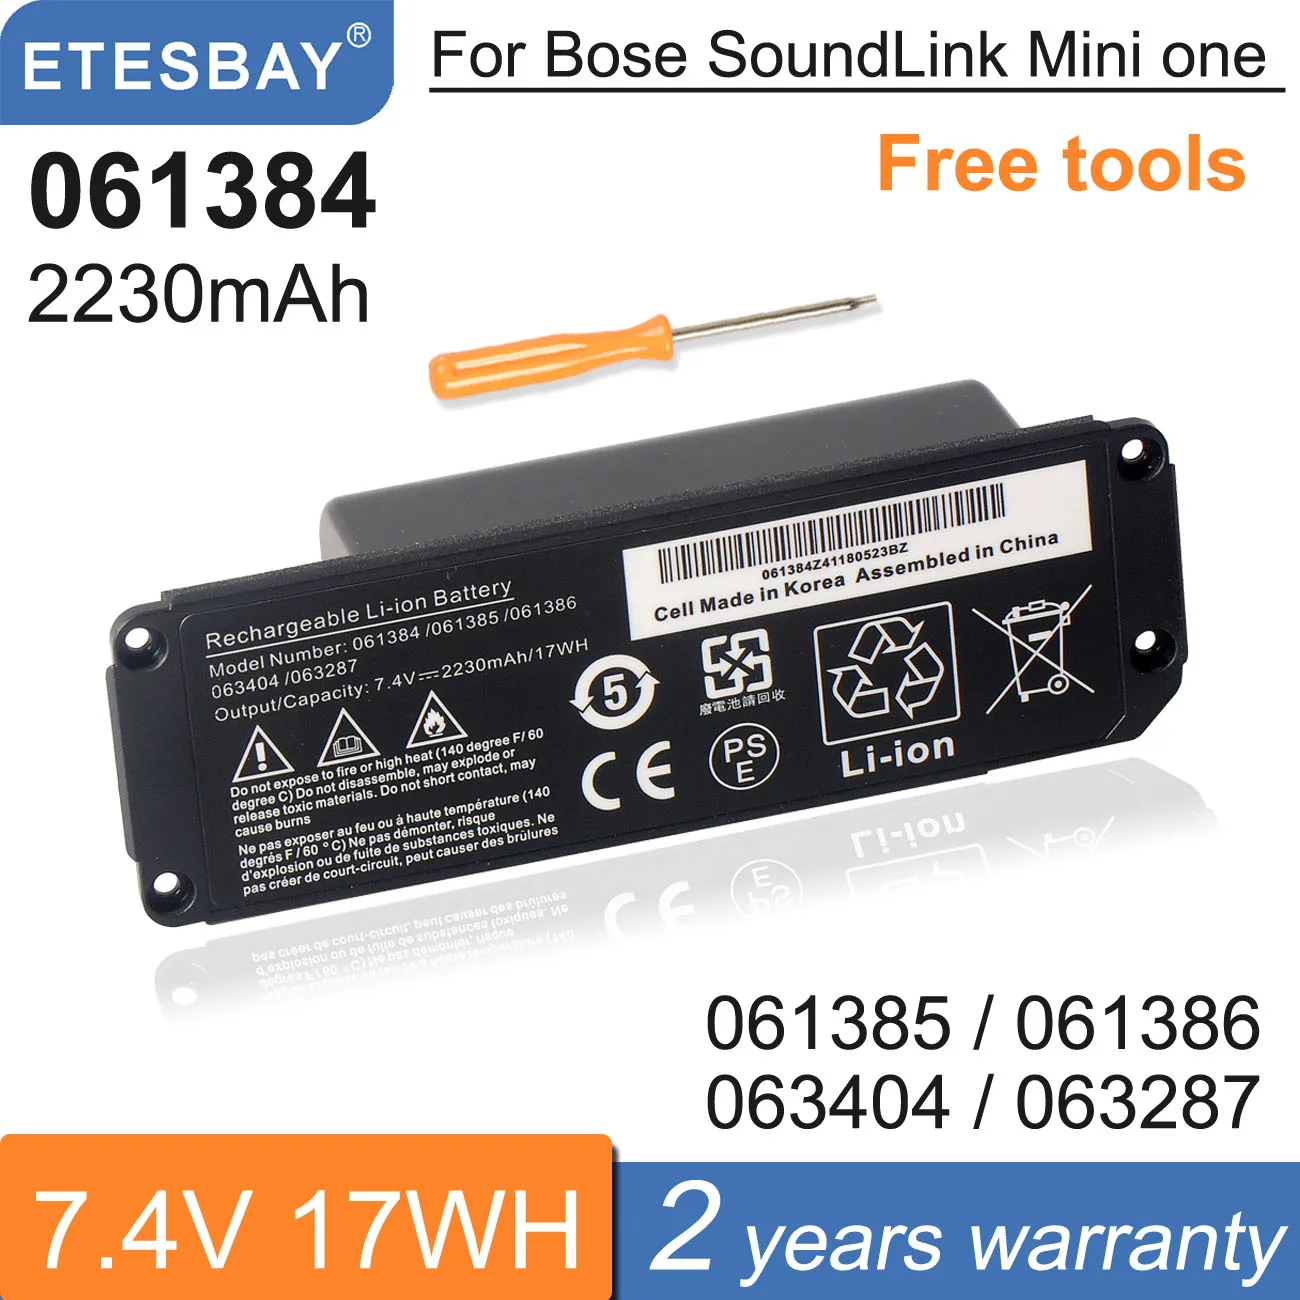 ETESBAY 061385 061384 061386 063404 063287 Rechargeable Battery For BOSE SoundLink Mini I Bluetooth Speaker 7.4V 17WH